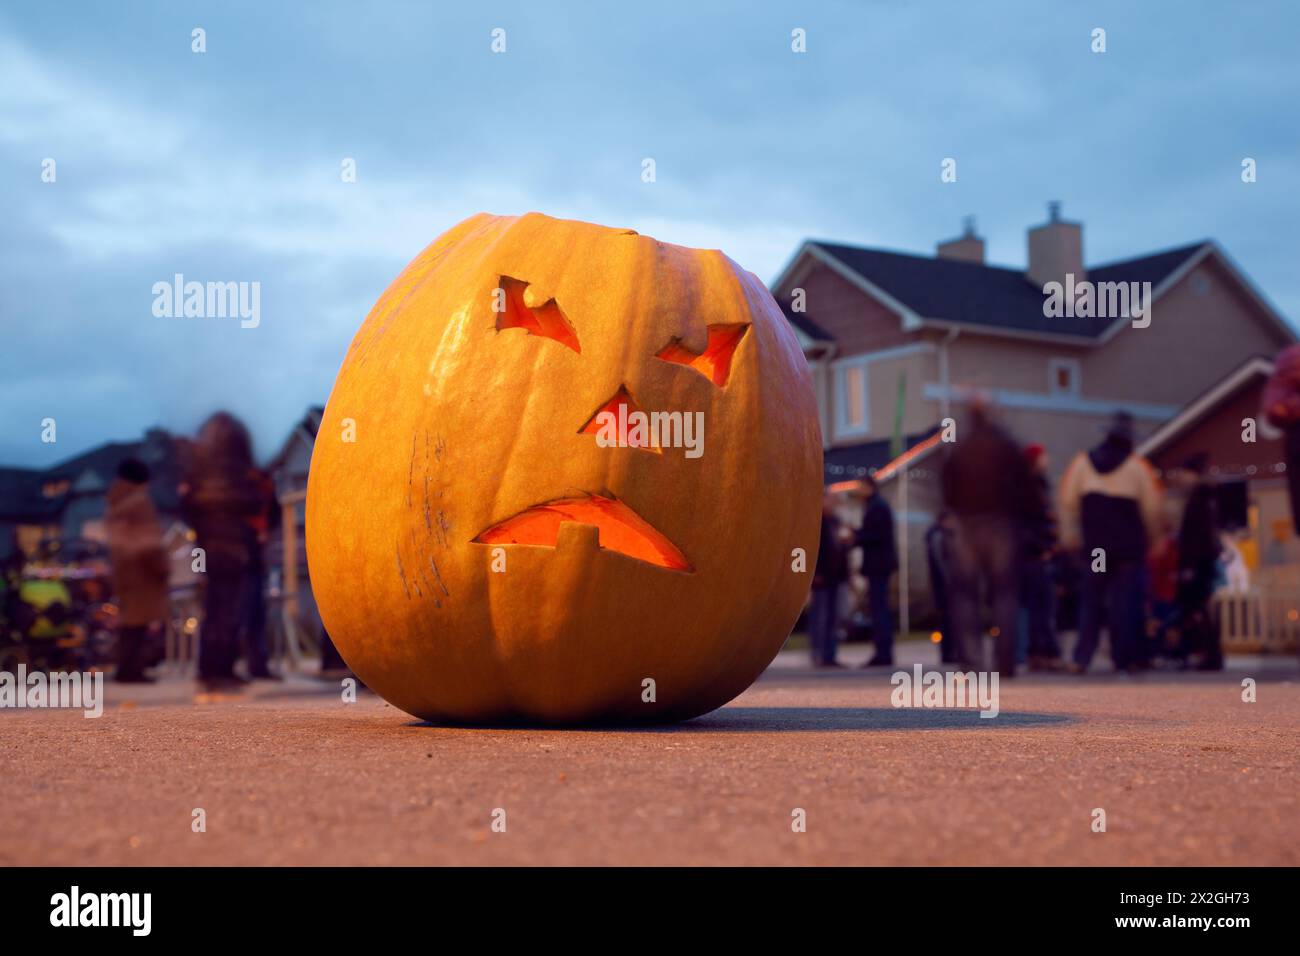 Scary Jack O'Lantern. Halloween pumpkin. Halloween celebrating. Behind pumpkin crowd of people Stock Photo